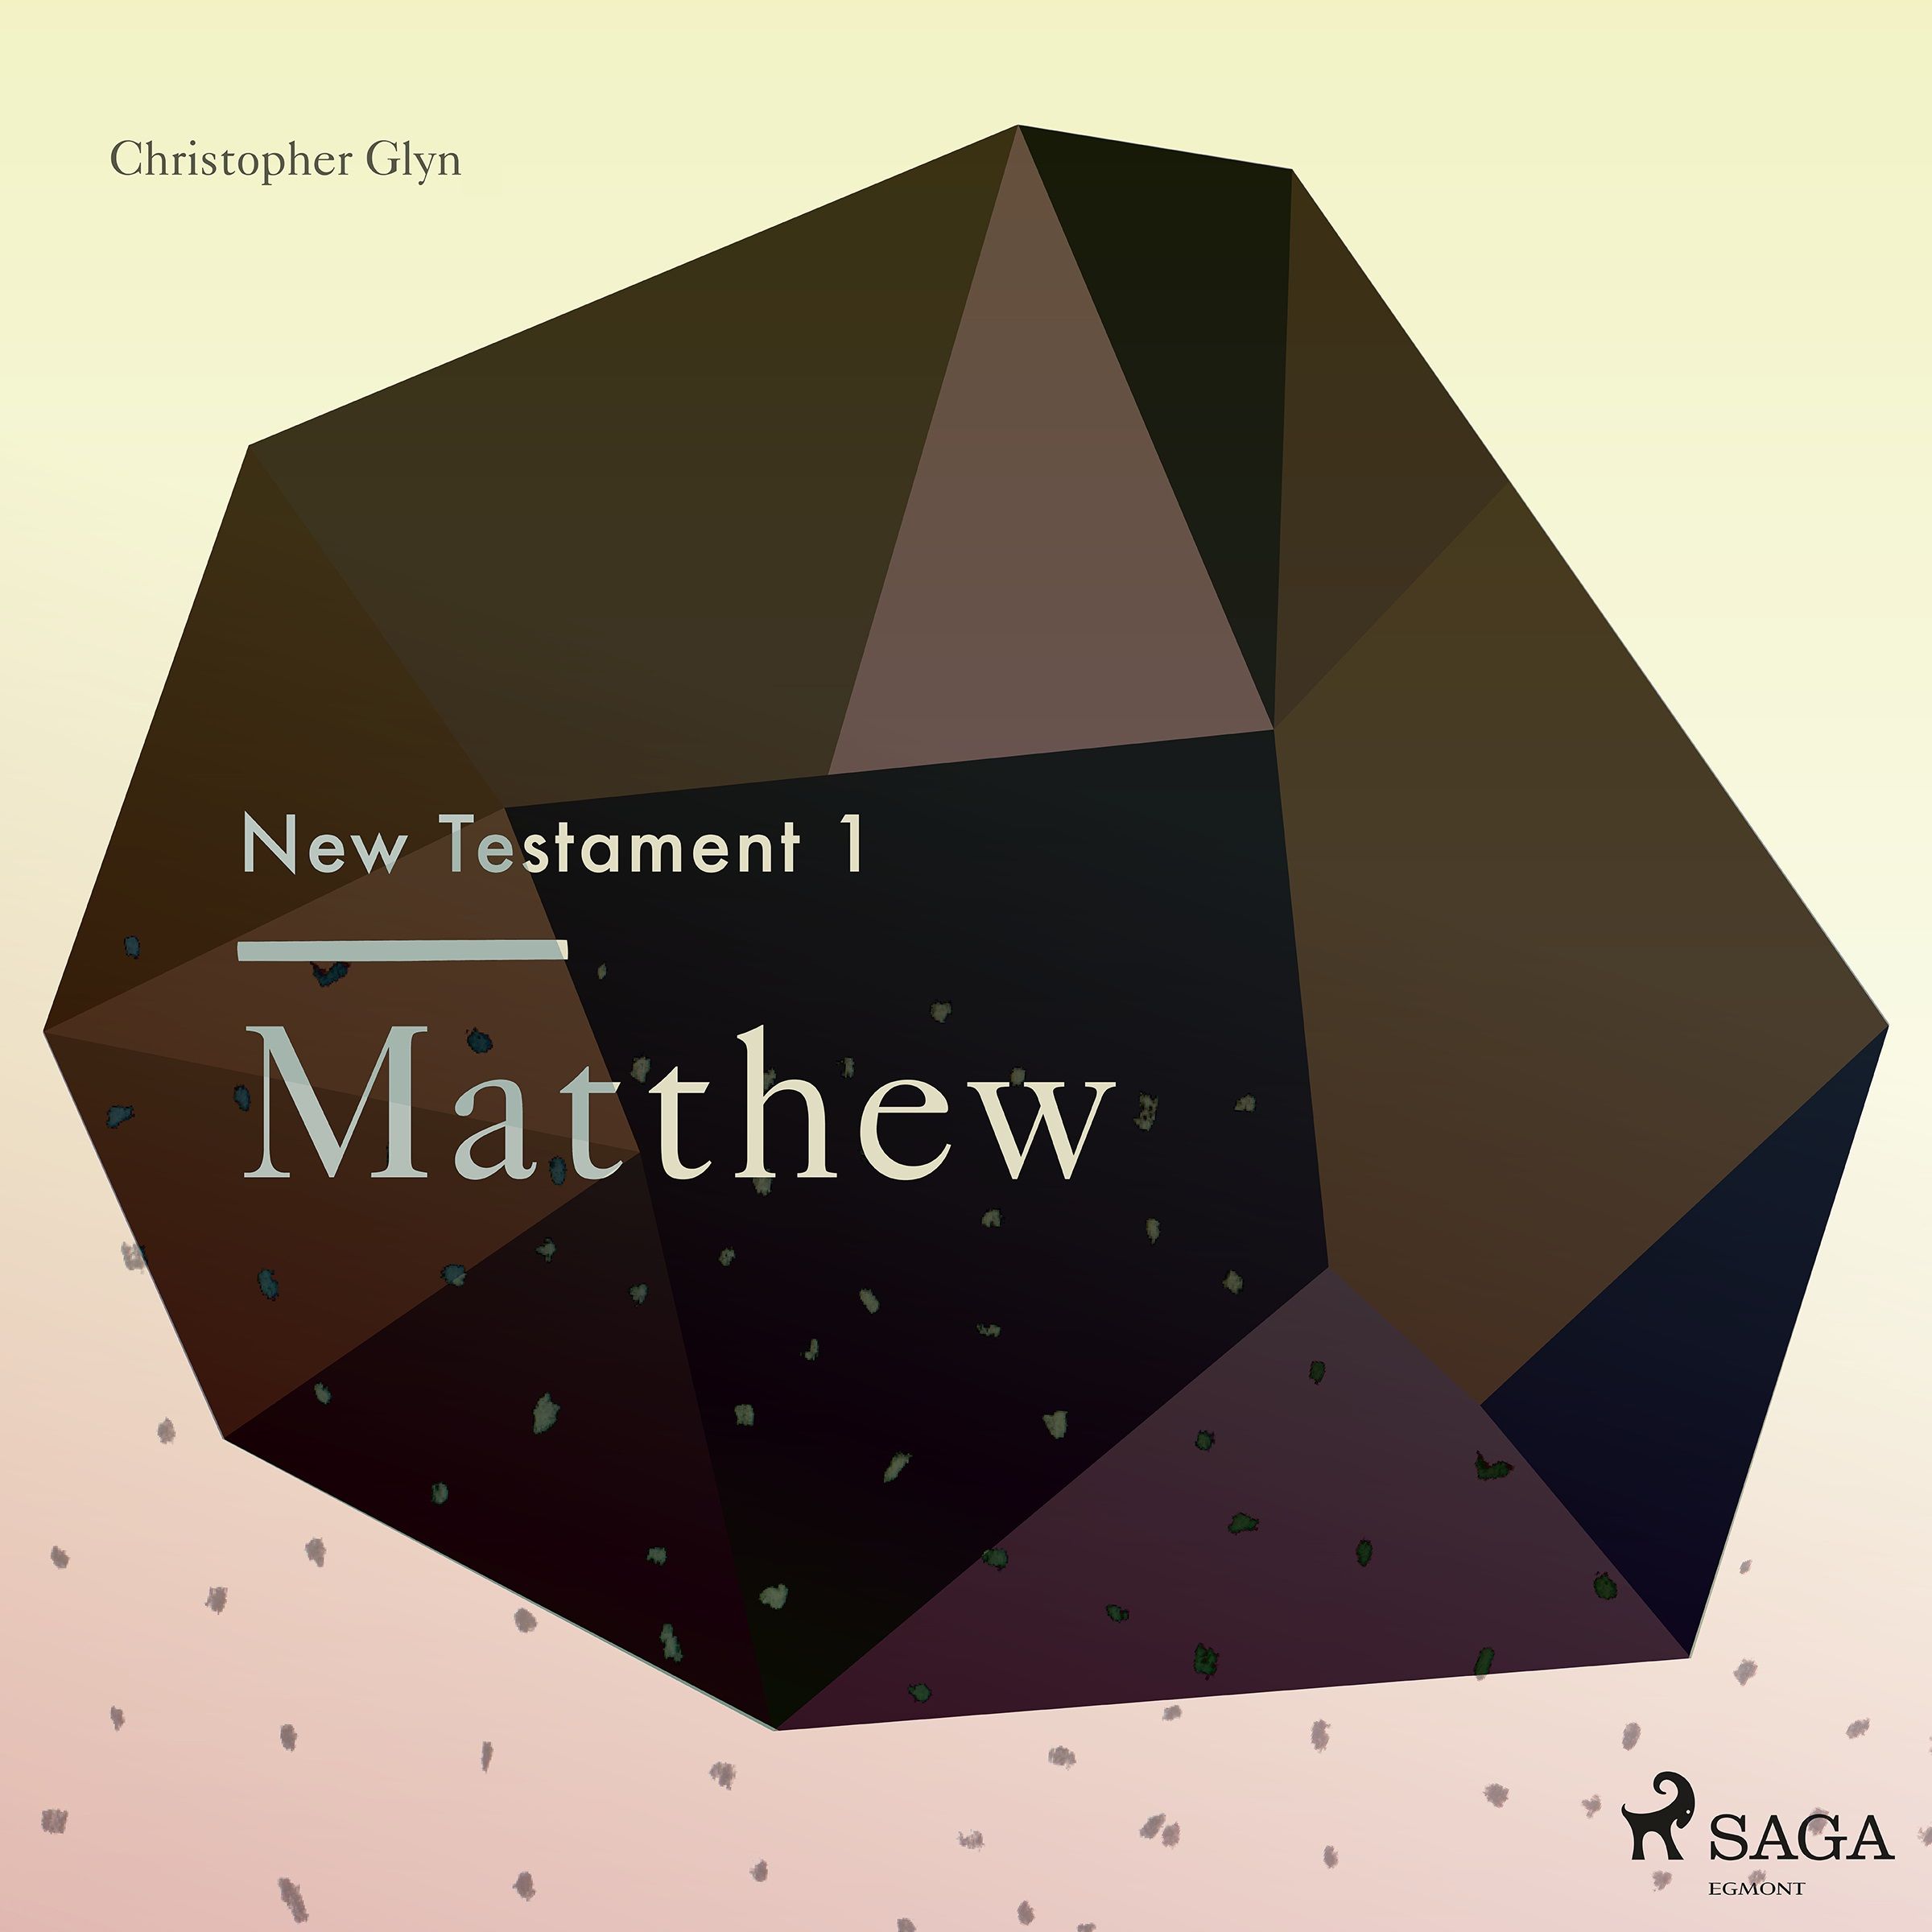 The New Testament 1 - Matthew, ljudbok av Christopher Glyn